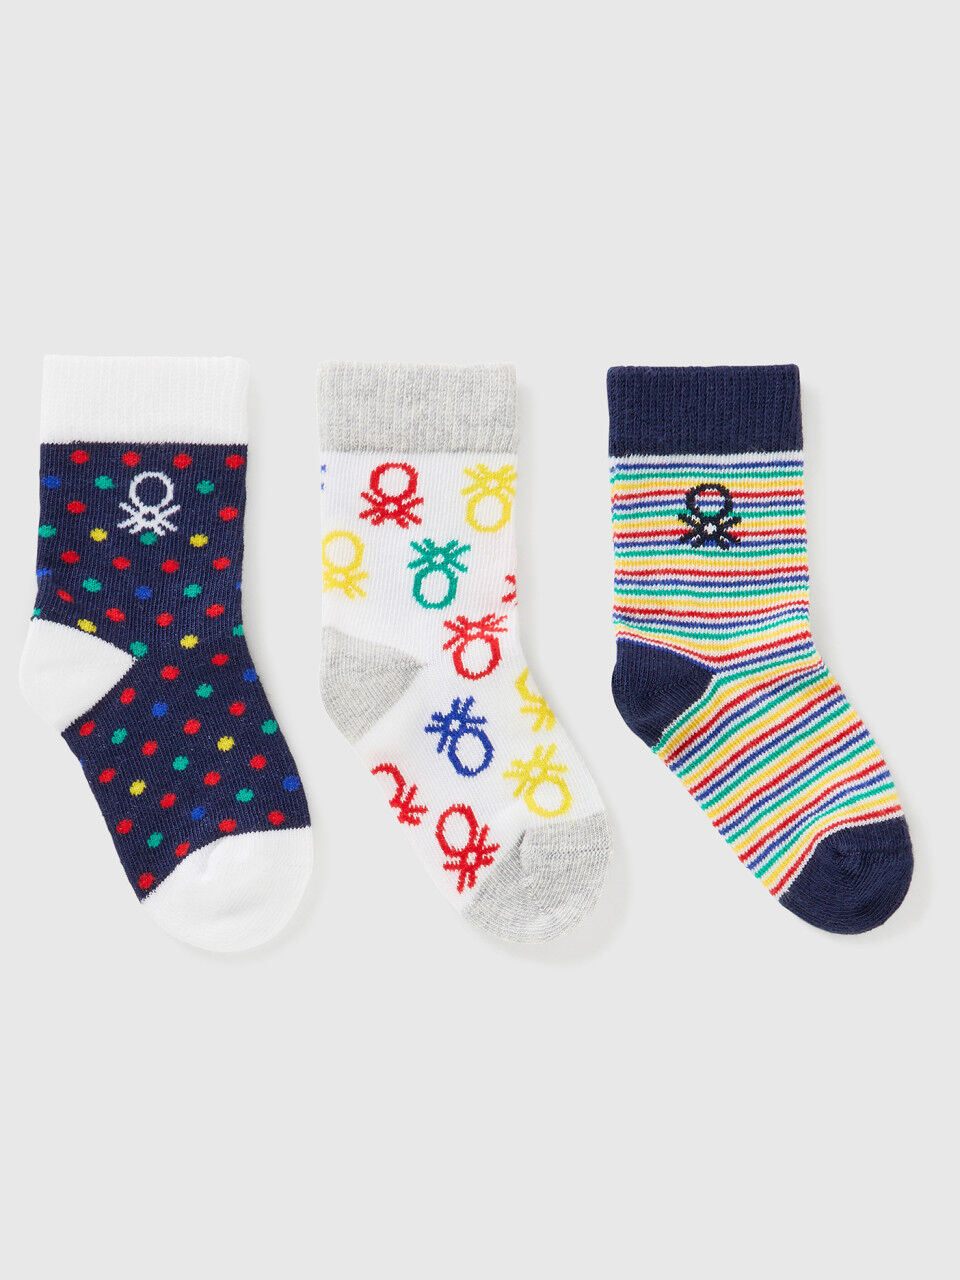 Three pairs of socks with jacquard pattern